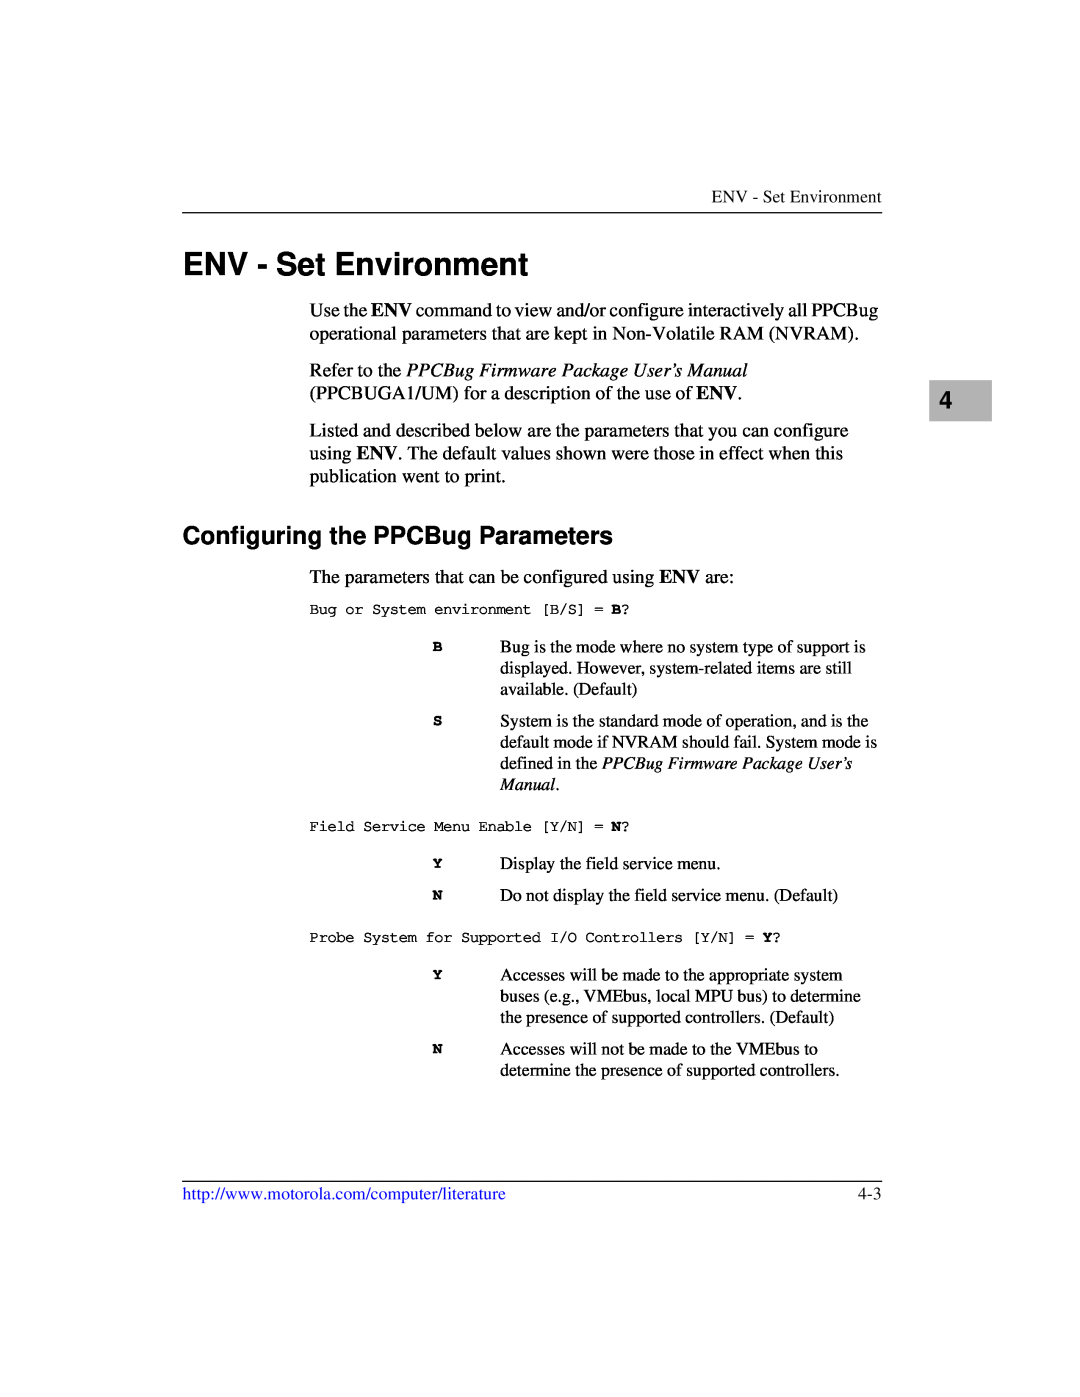 Motorola IH5, MCPN750A manual ENV - Set Environment, Configuring the PPCBug Parameters 